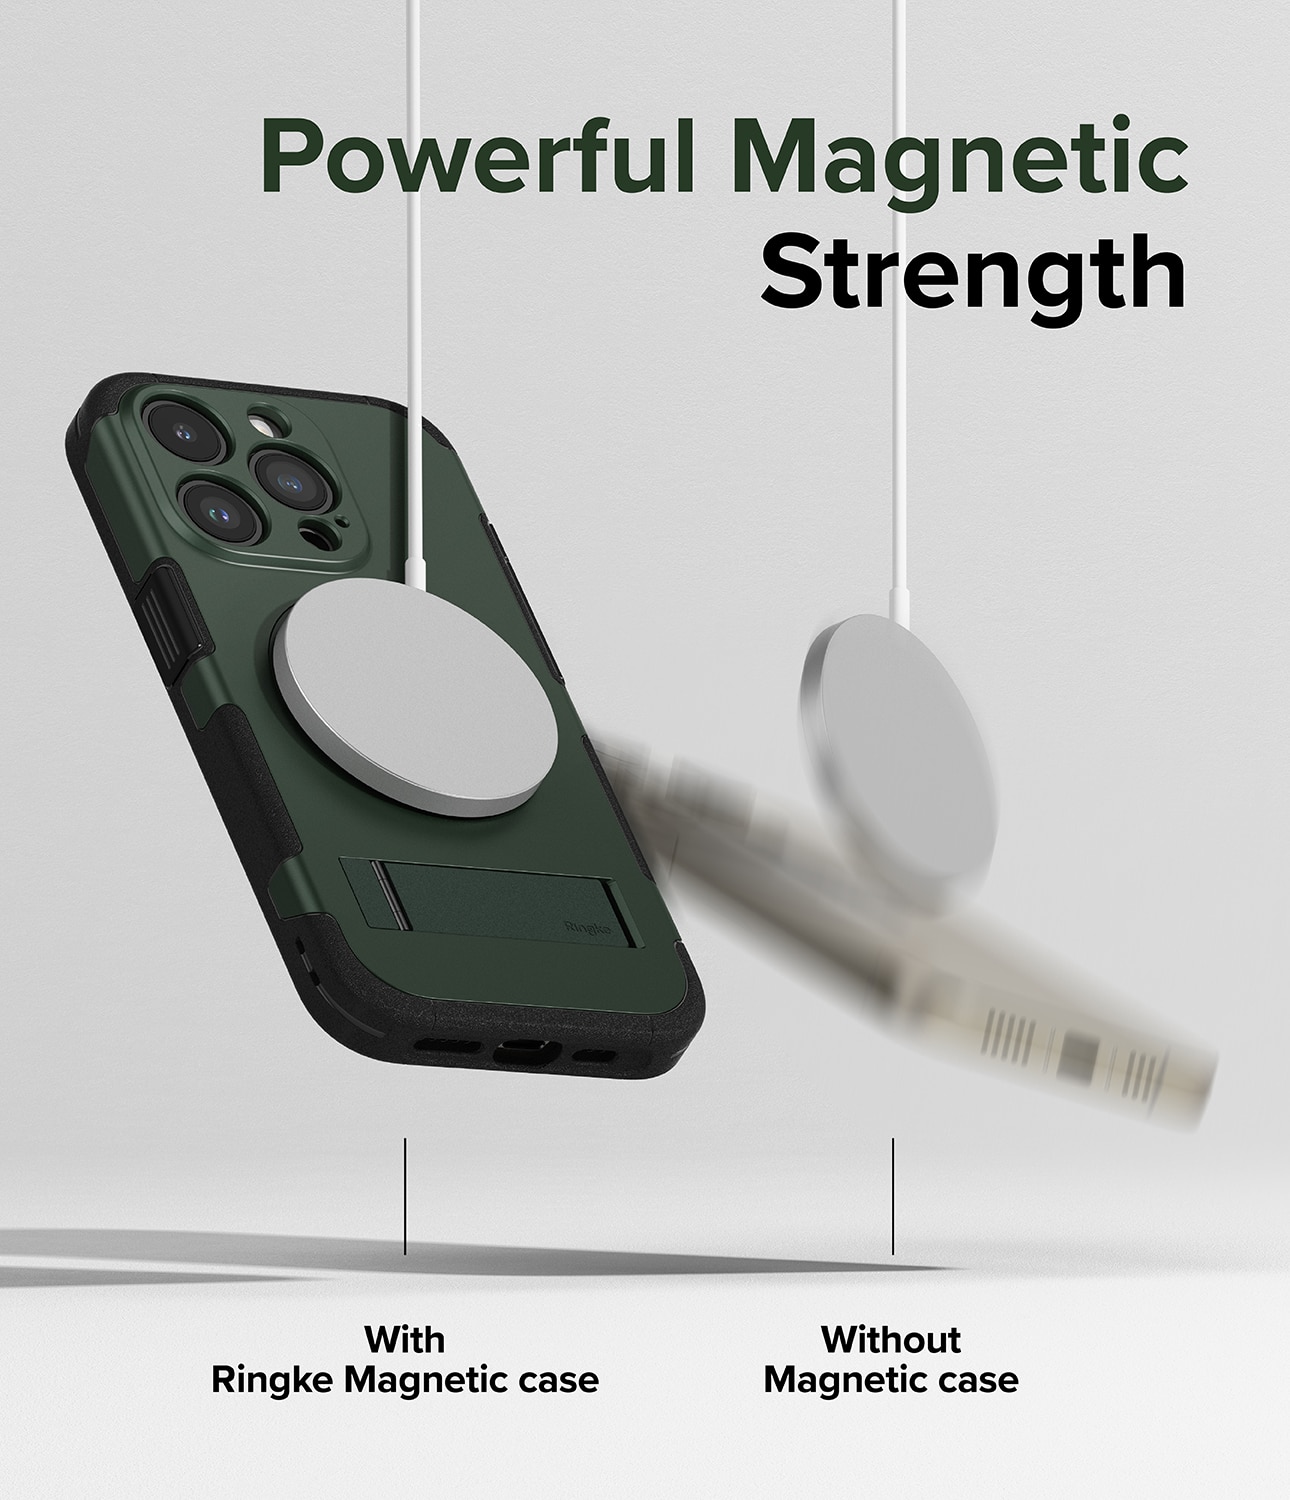 Alles Magnetic Coque iPhone 15 Pro Max, Dark Green